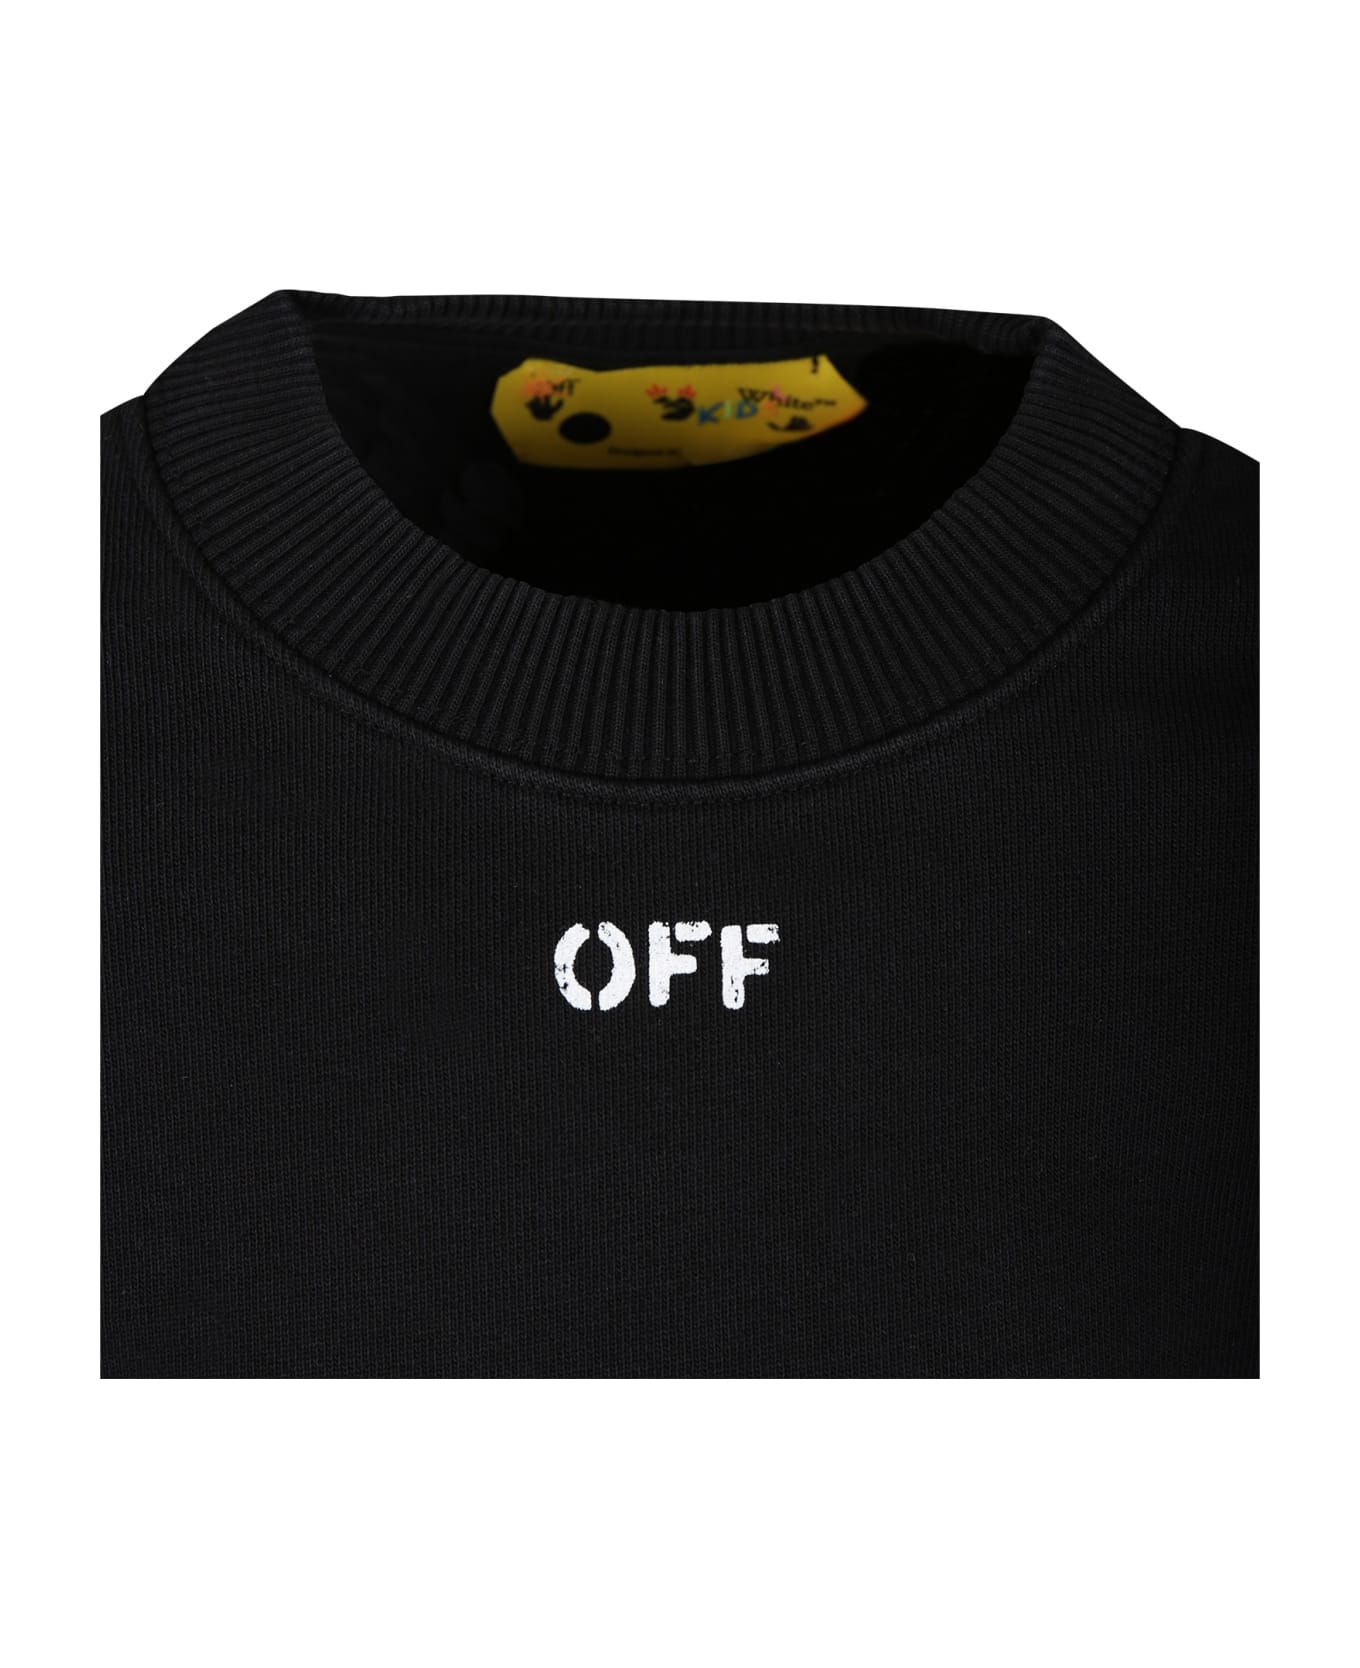 Off-White Black Sweatshirt For Boy With Logo - Black White